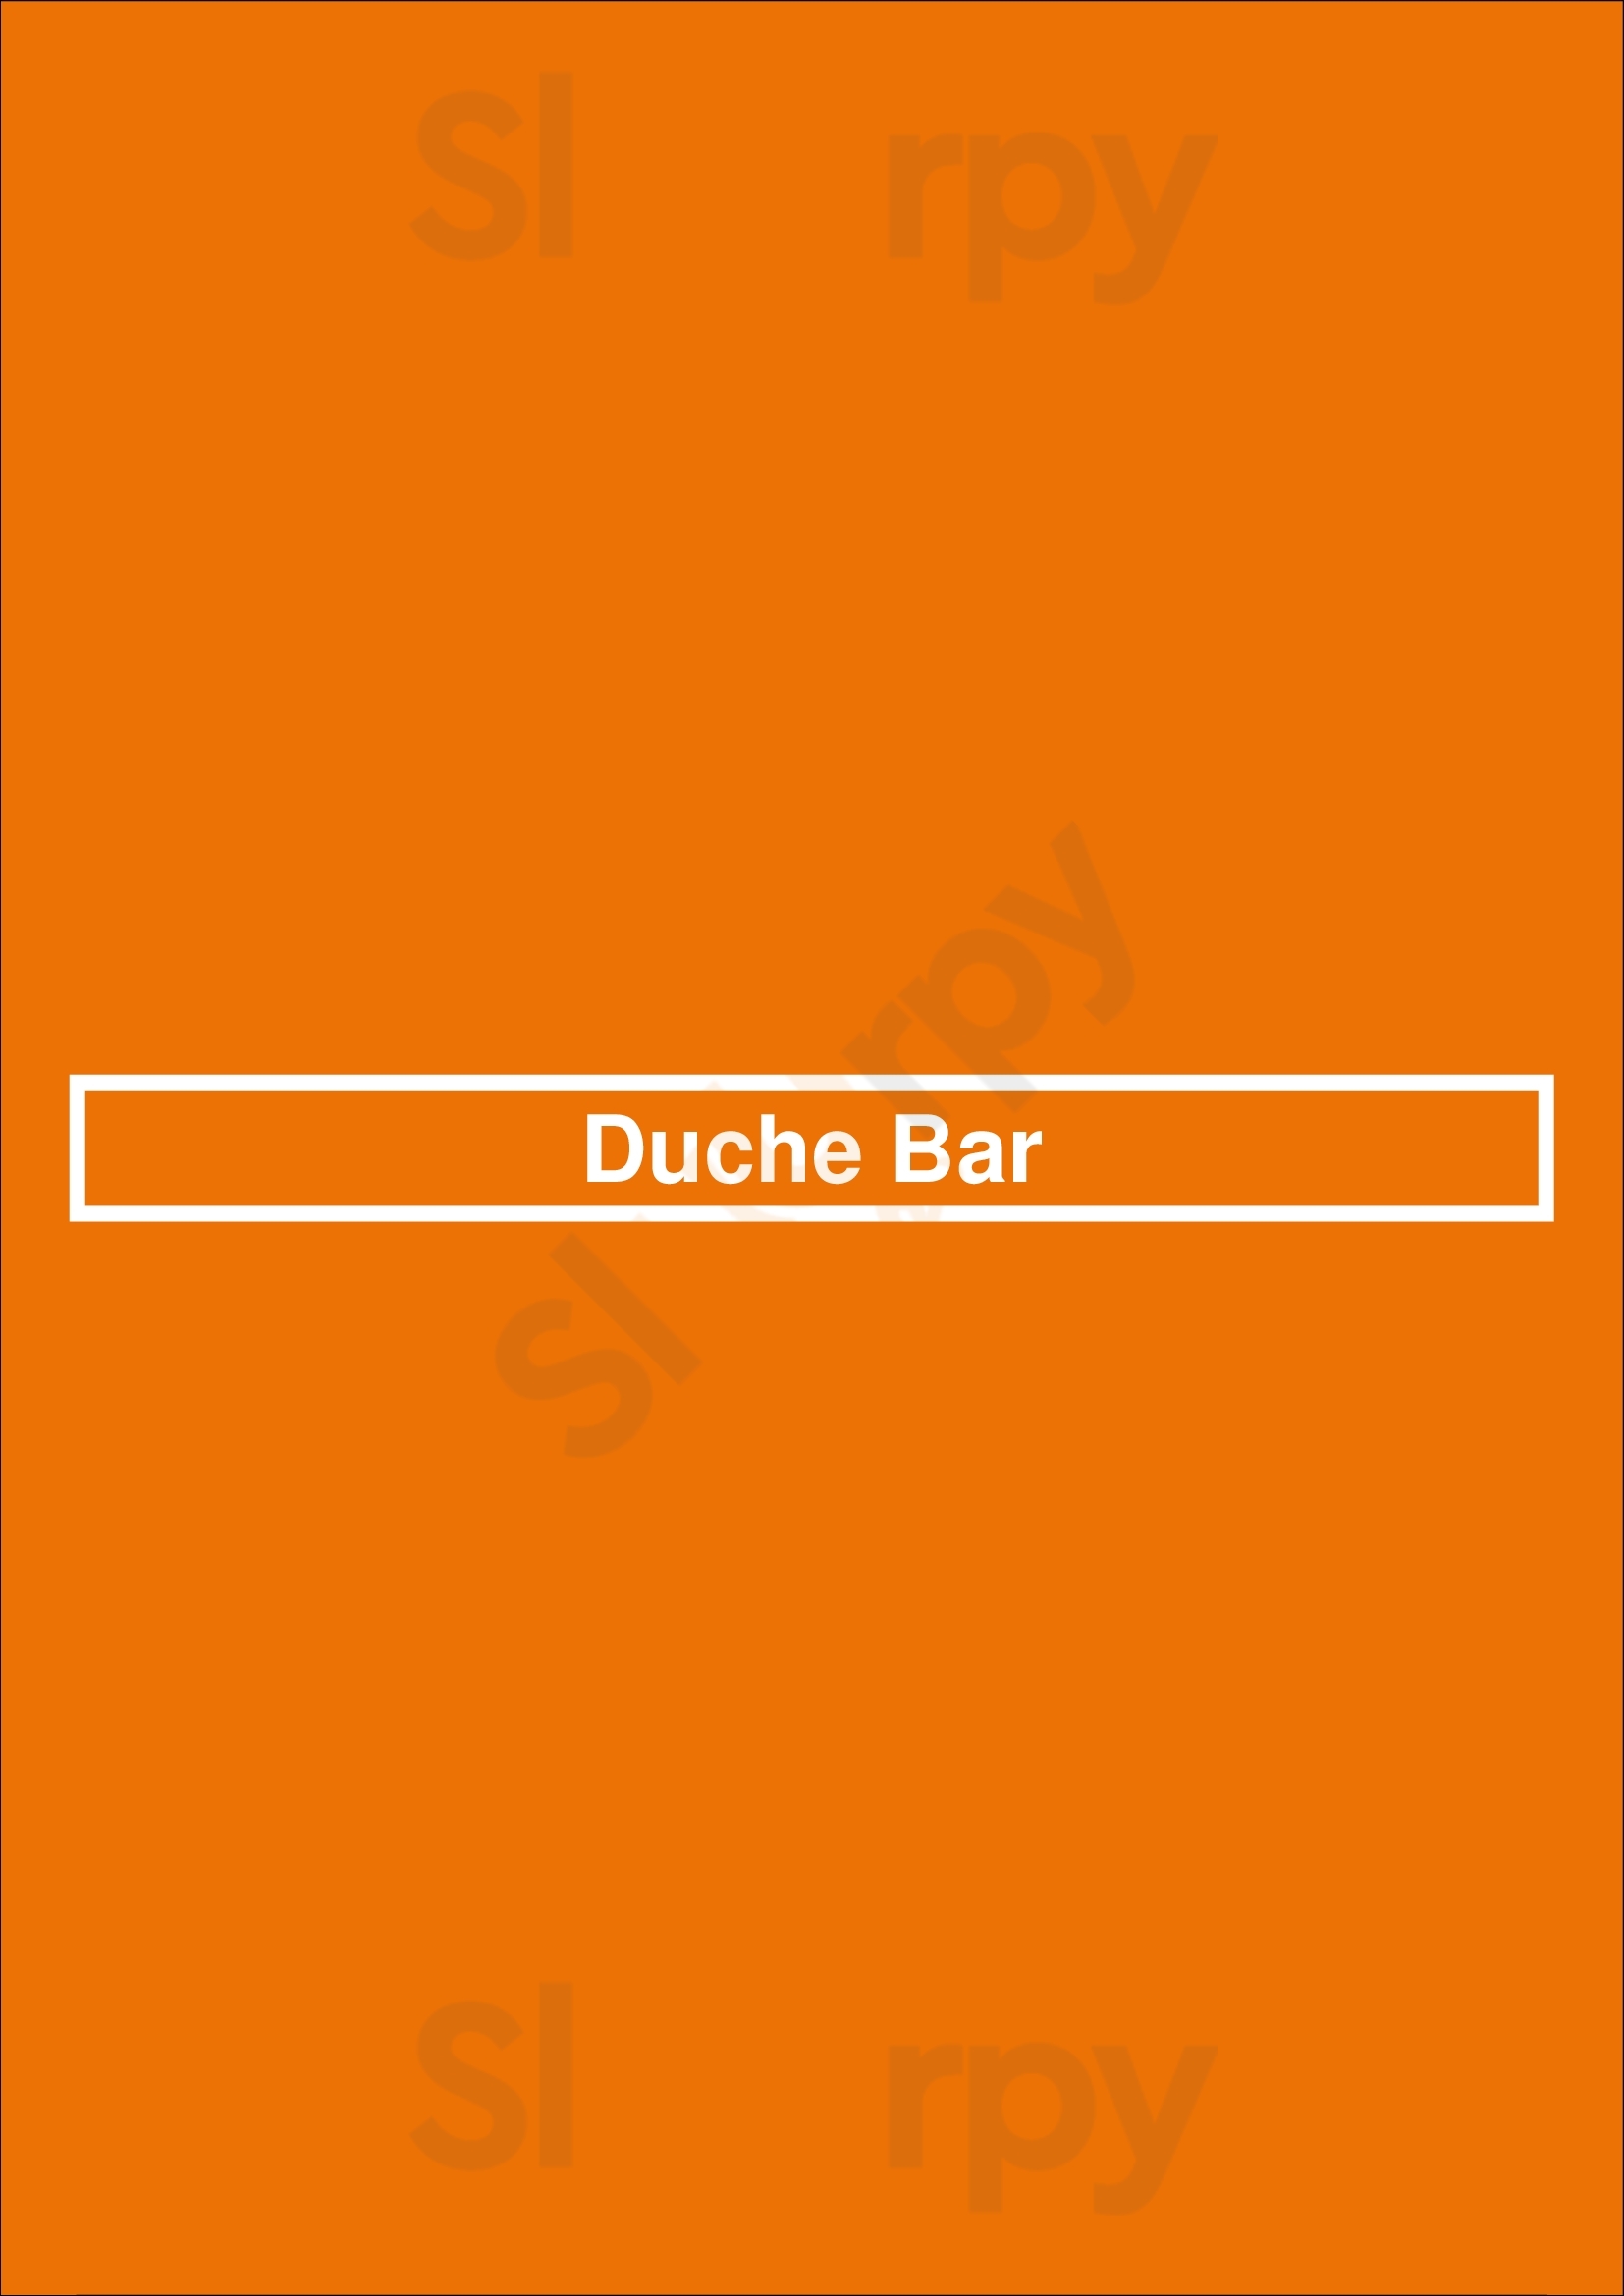 Restaurante Duche Bar Cascais Menu - 1